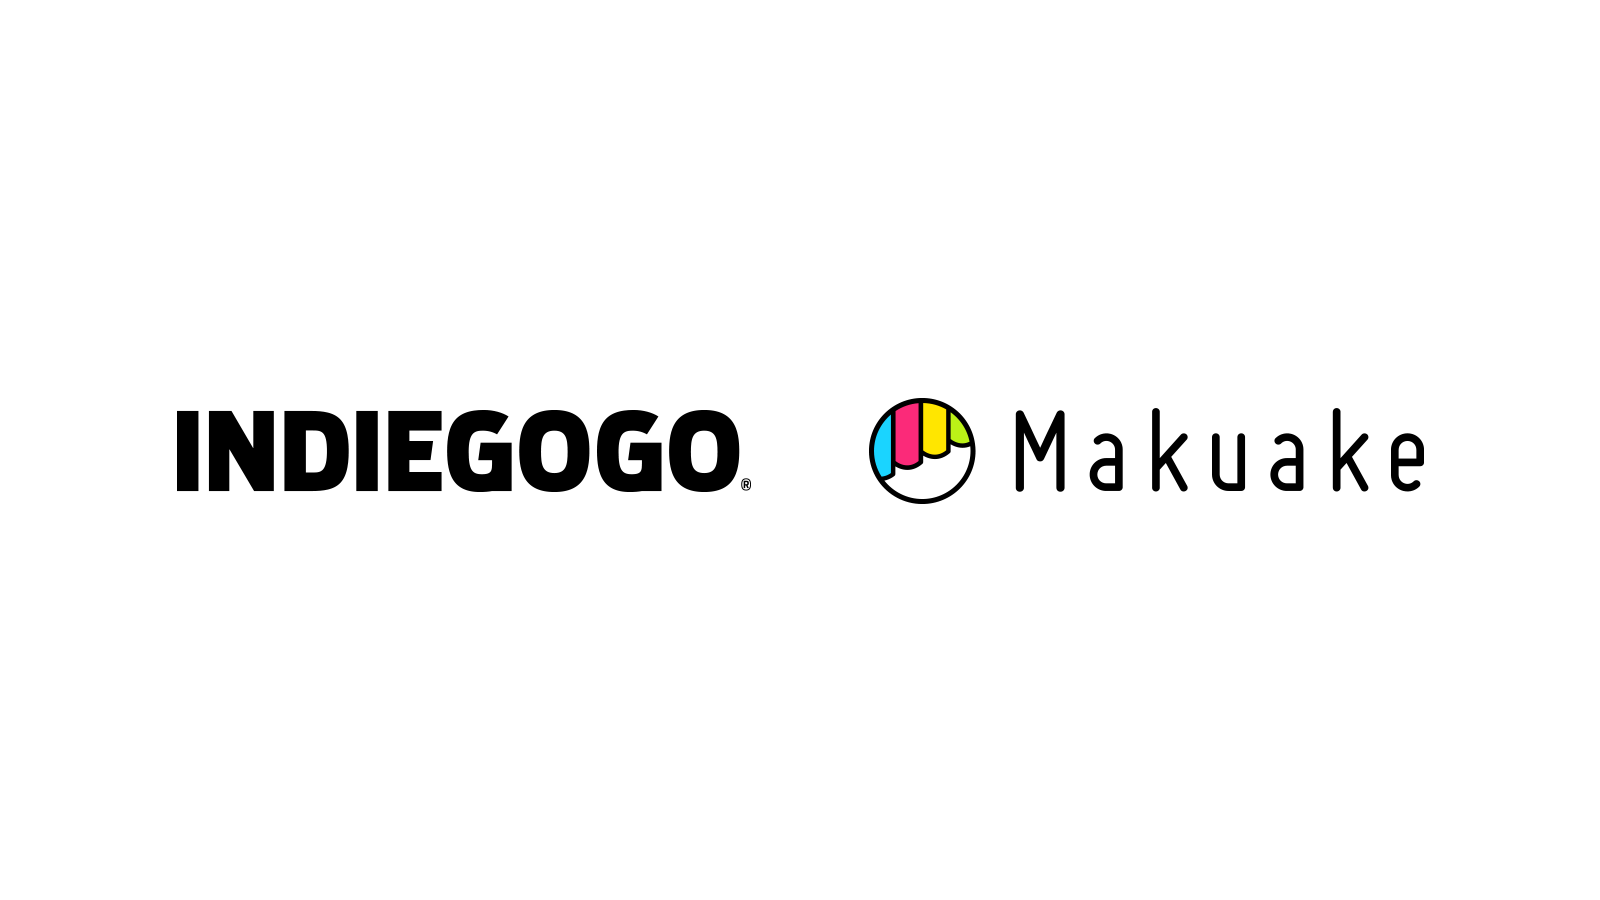 MakuakeがIndiegogoと業務提携、それぞれの地域での進出をサポート